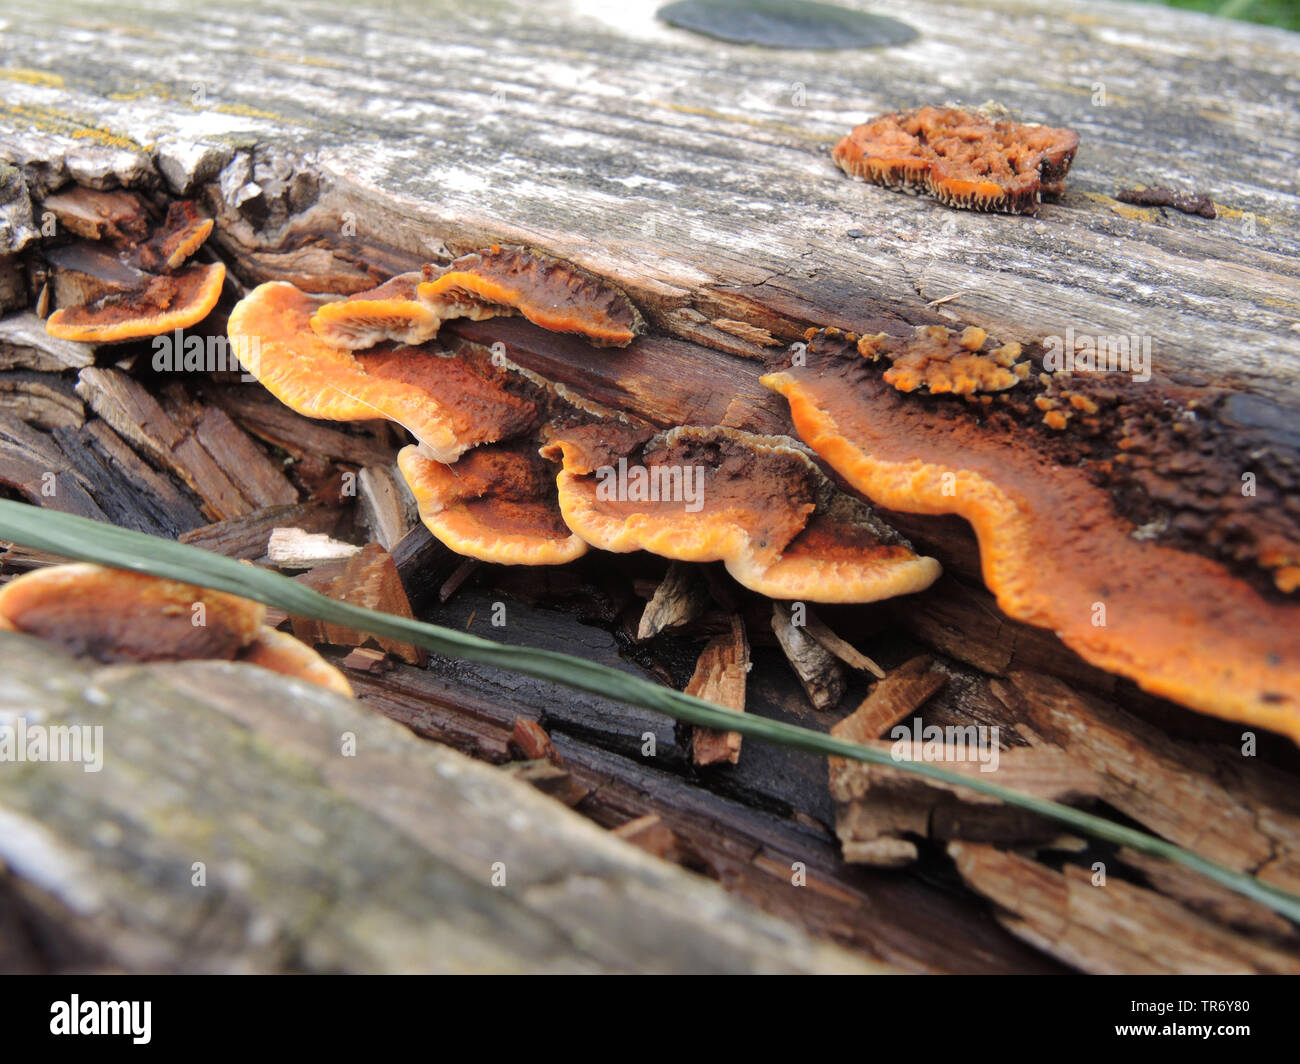 conifer mazegill (Gloeophyllum sepiarium), on an old wooden bench, Germany, North Rhine-Westphalia Stock Photo